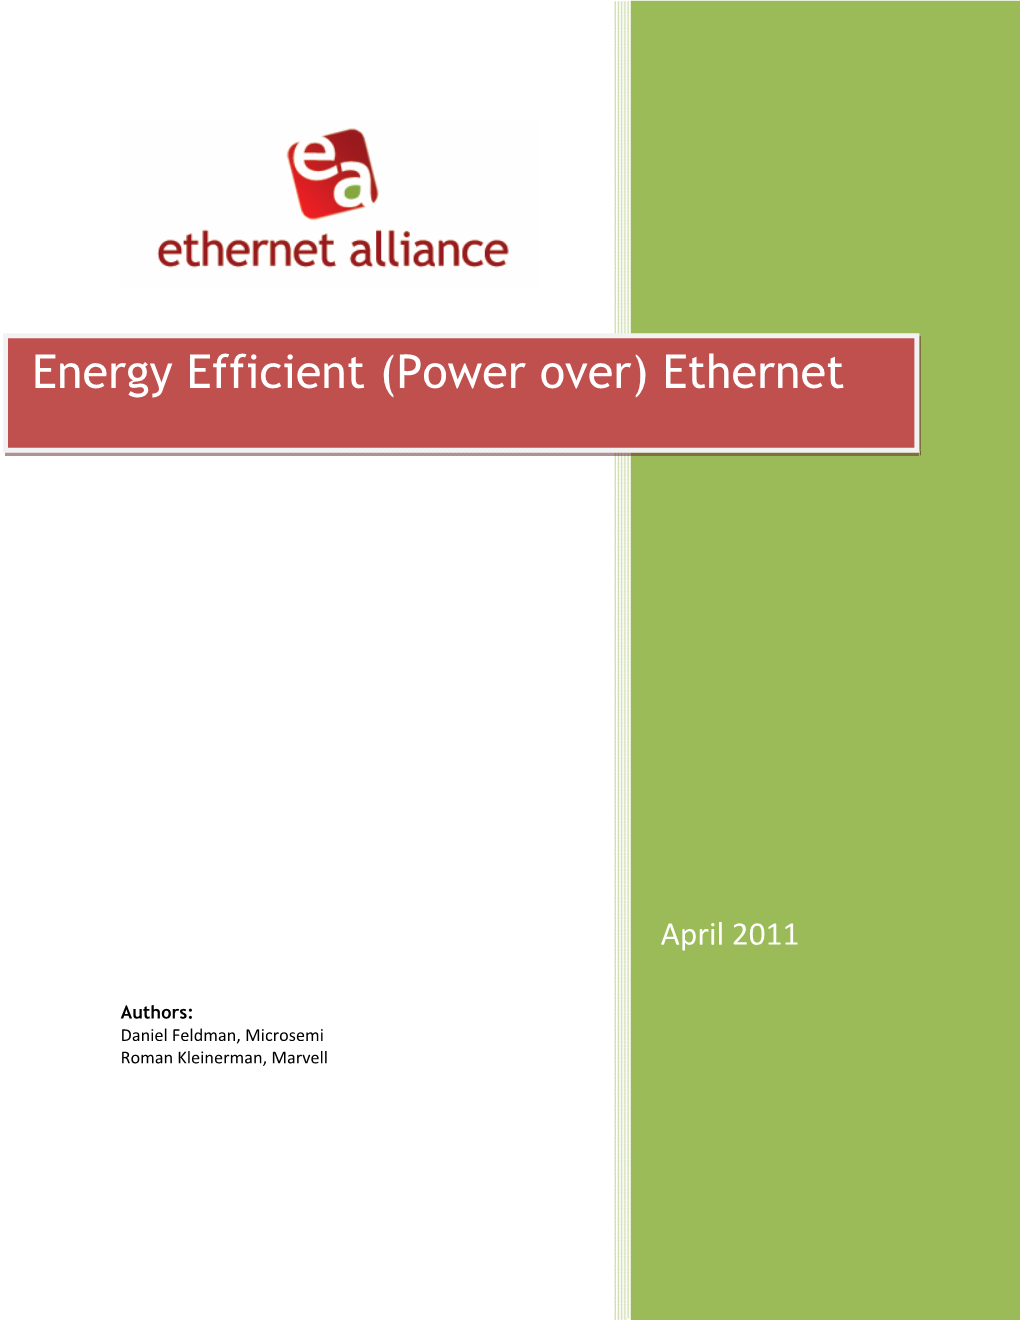 Energy Efficient (Power Over) Ethernet